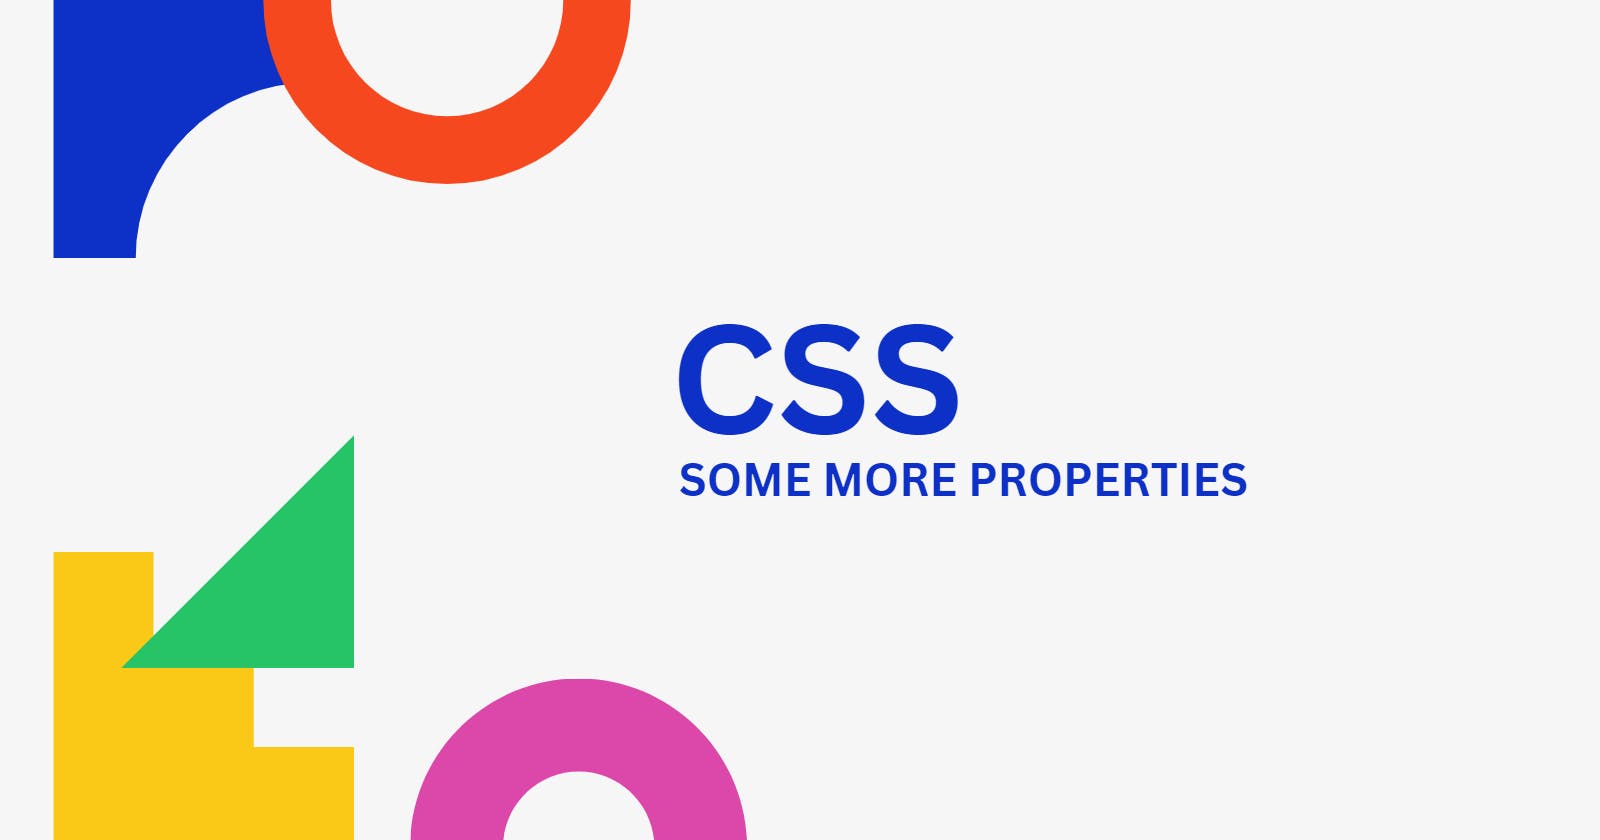 More Properties Of CSS